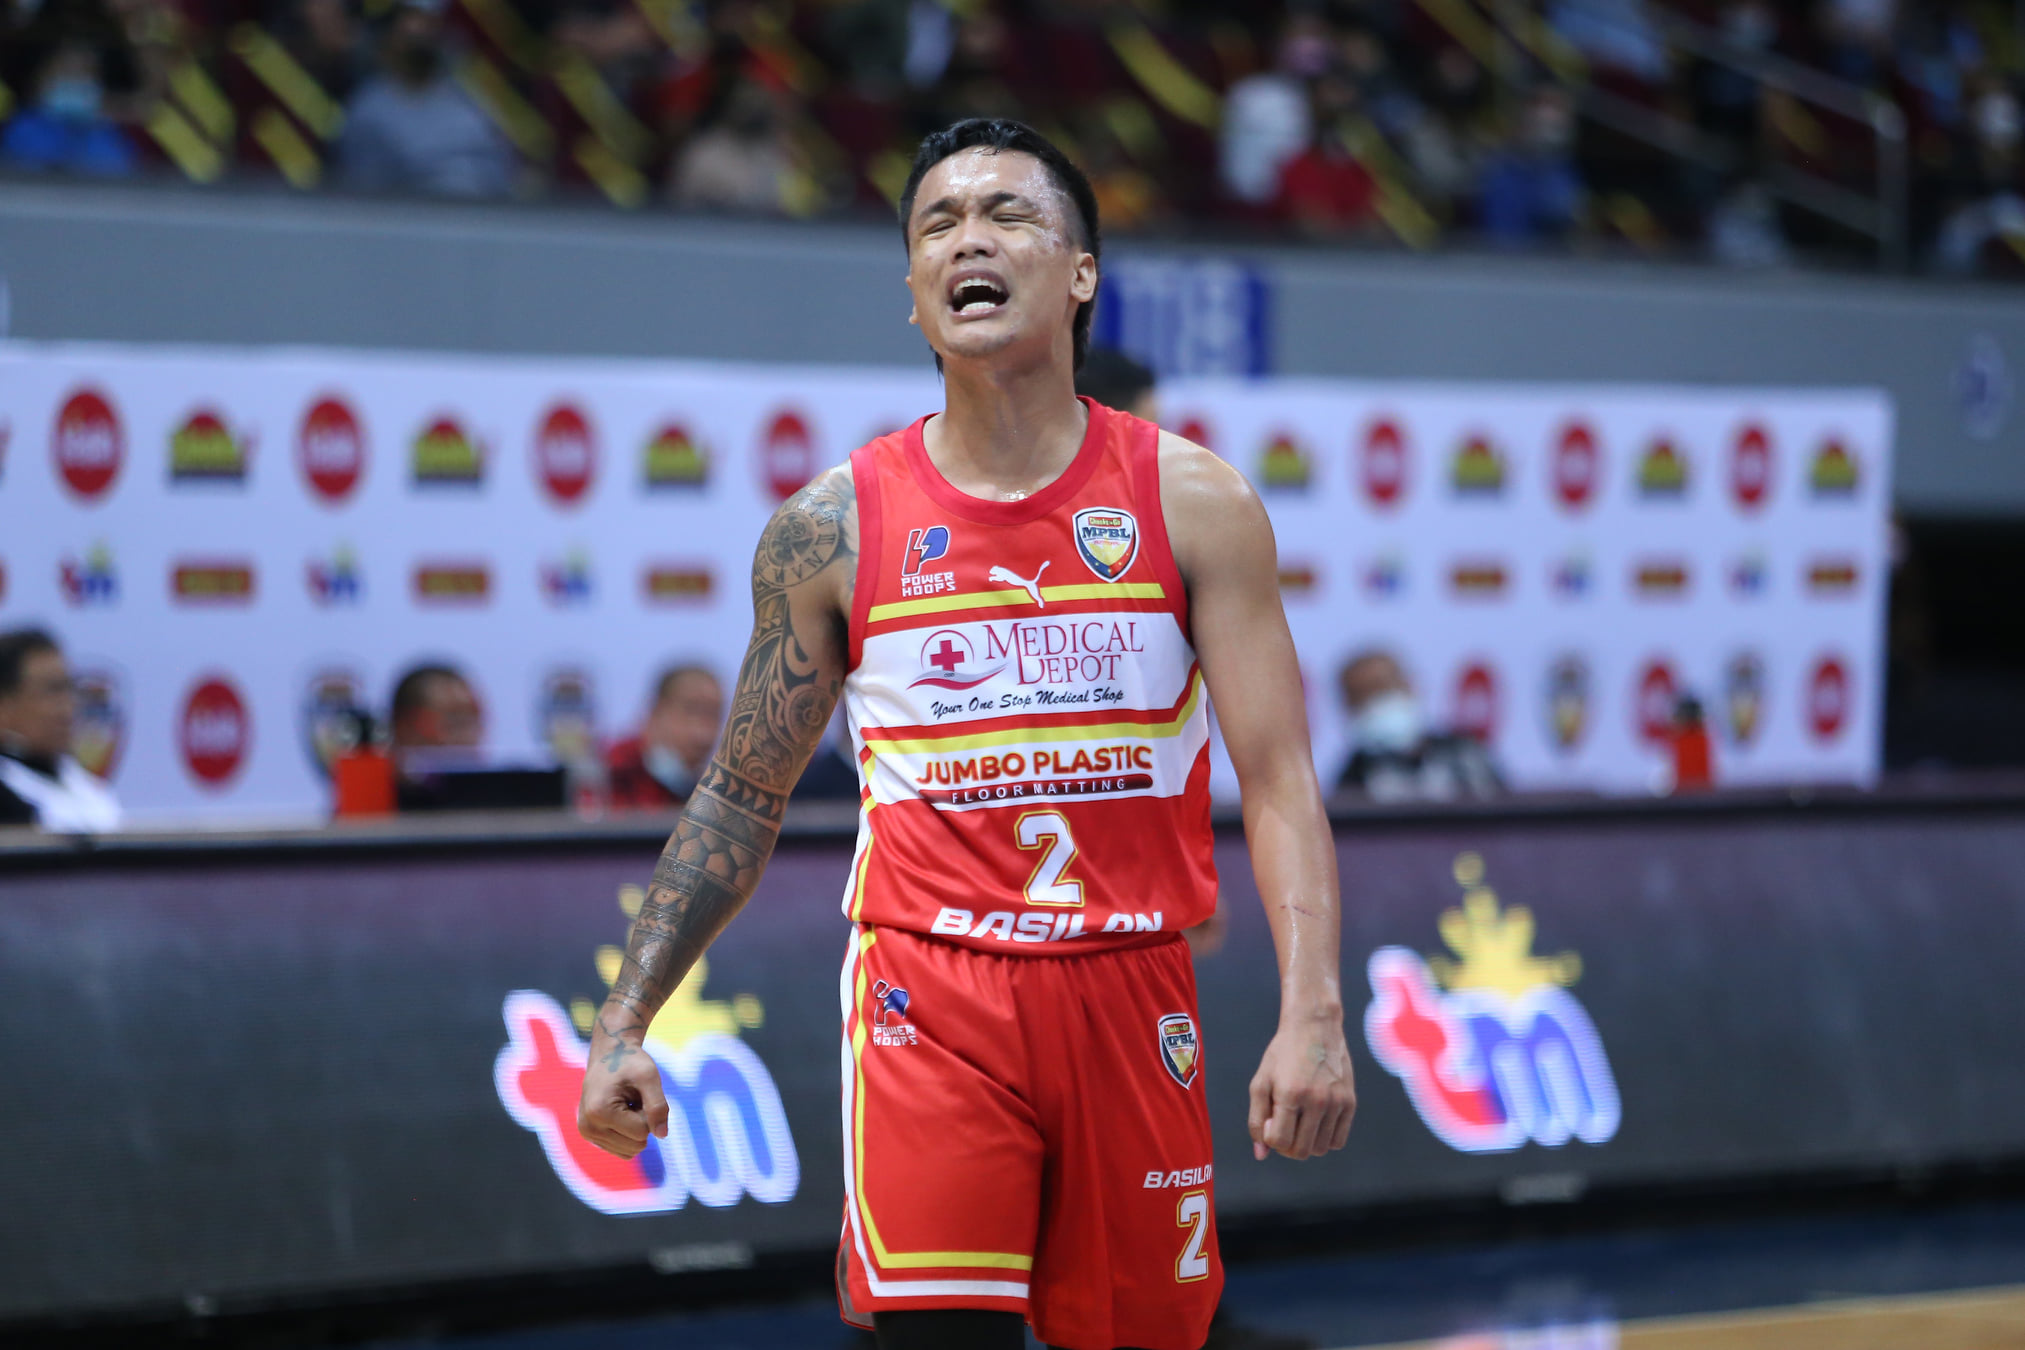 2021-Chooks-MPBL-Makati-vs-Basilan-Encho-Serrano-2 After spectacular year, Encho Serrano eyes PBA Draft next Basketball MPBL News  - philippine sports news